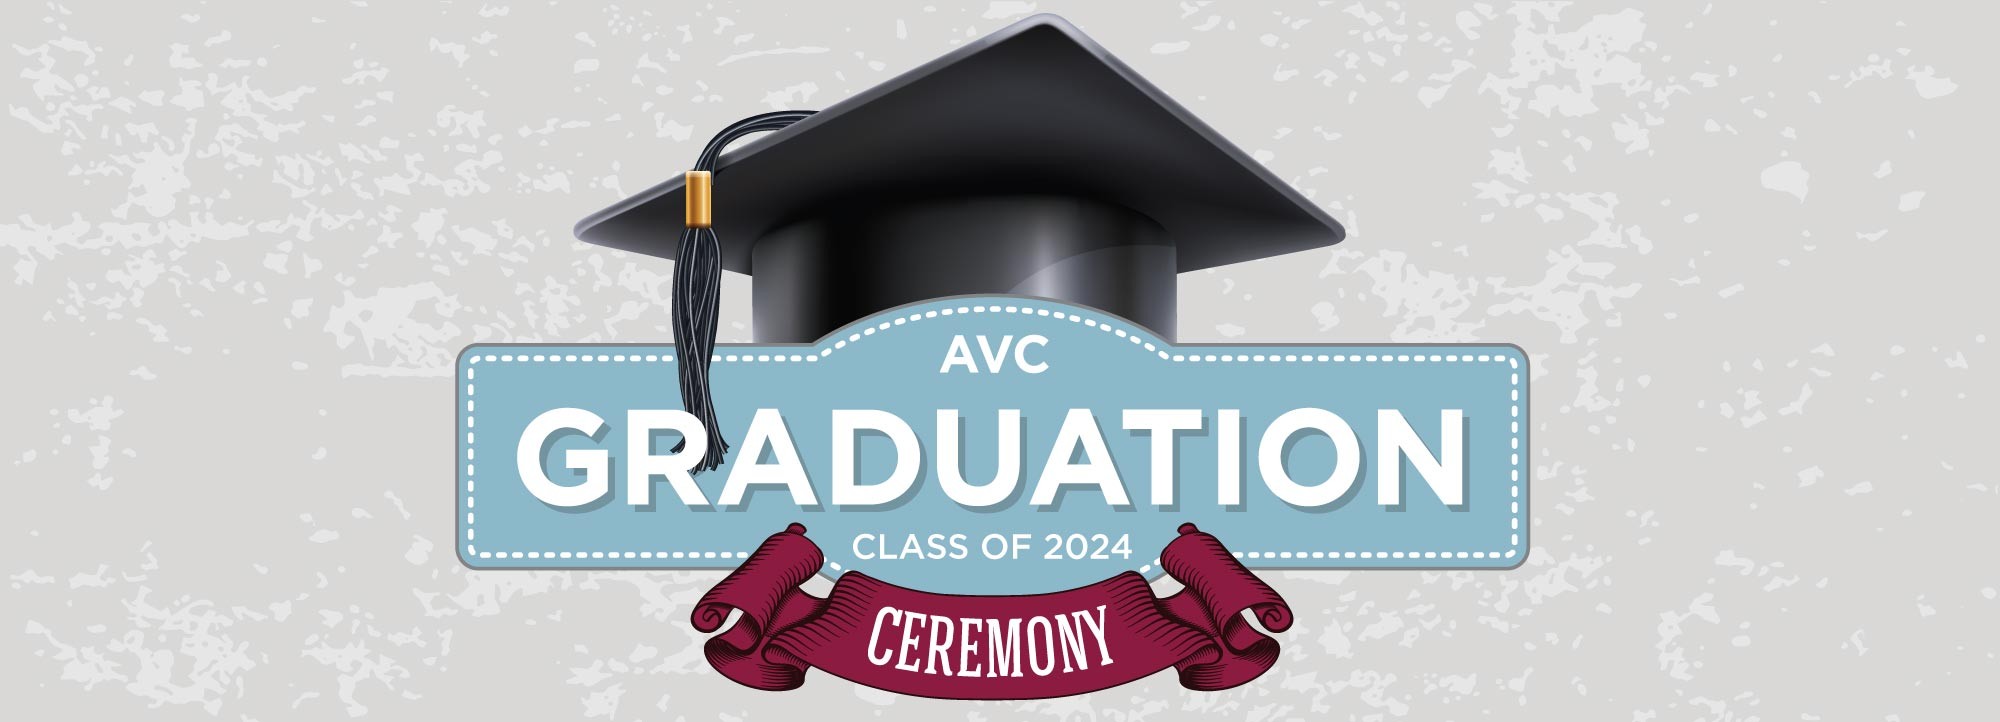 AVC Graduation Ceremony